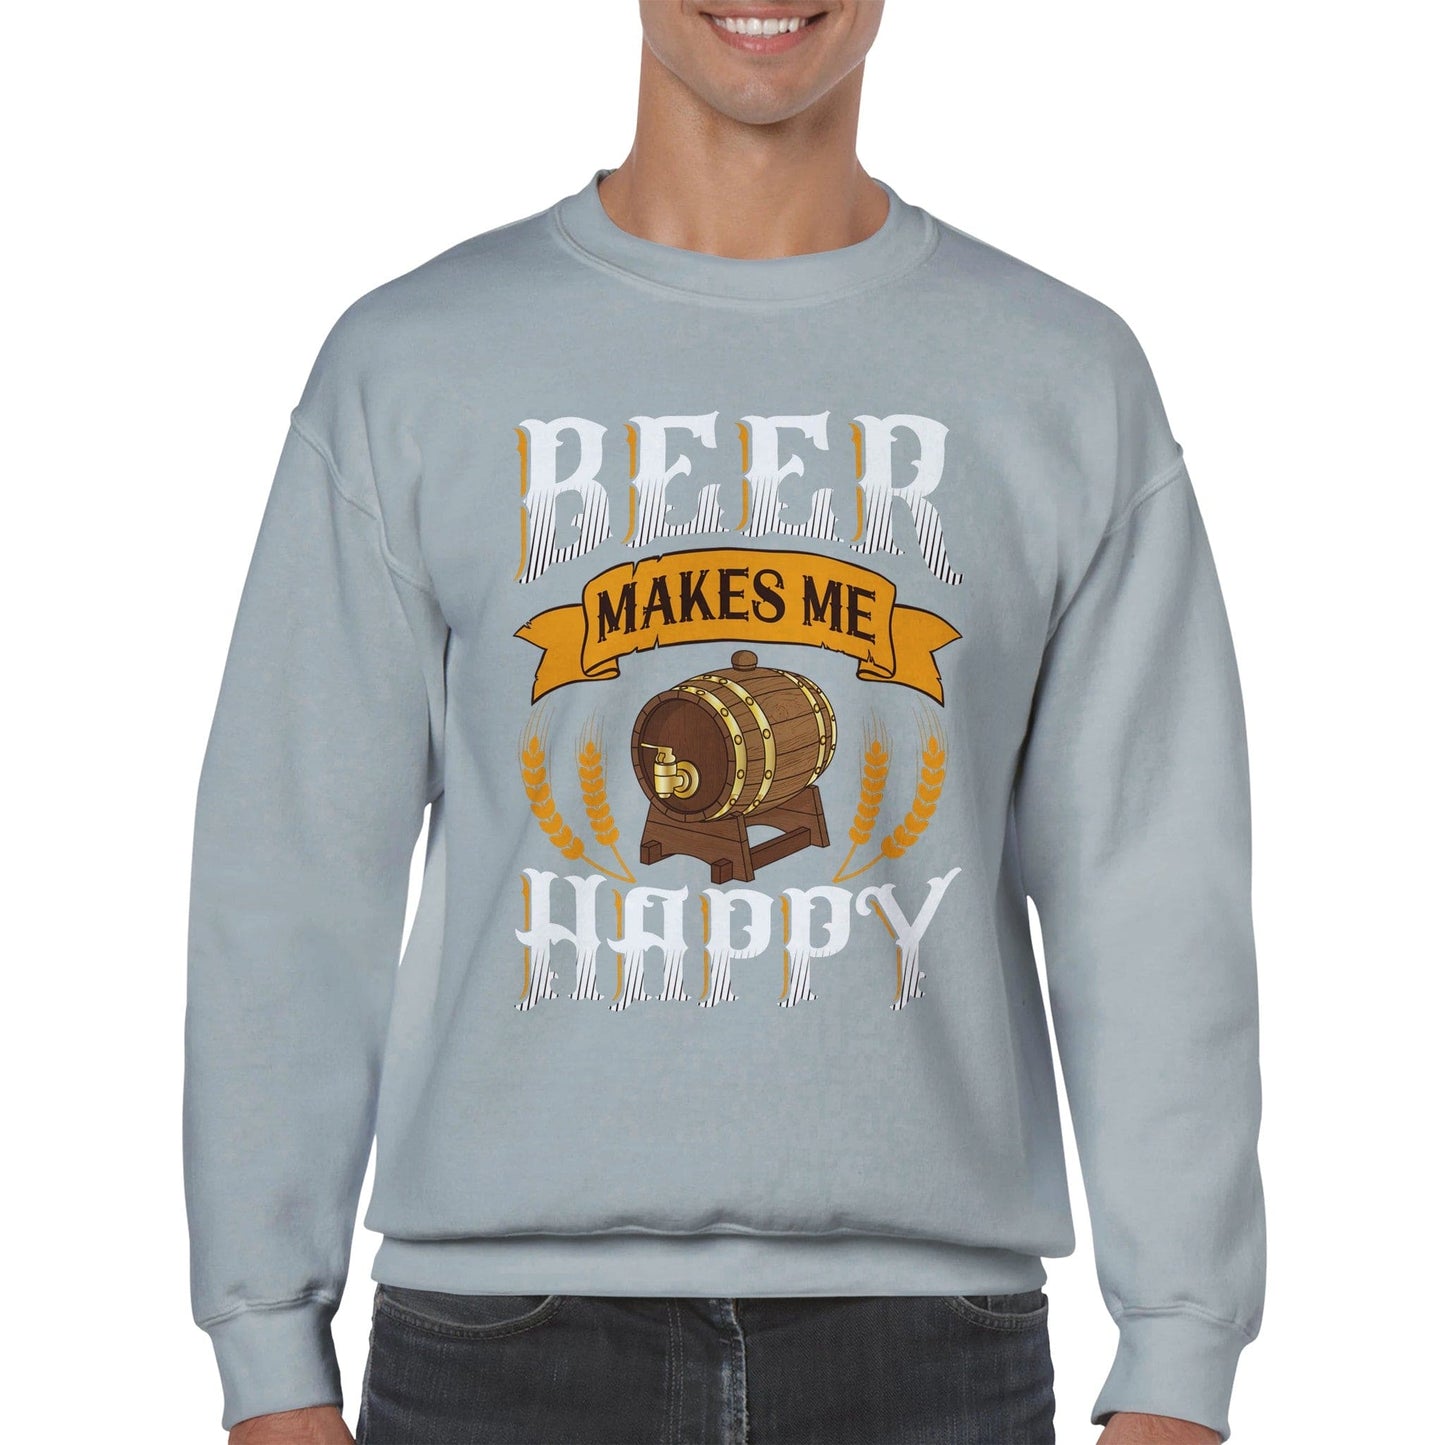 "Beer makes me happy" trui